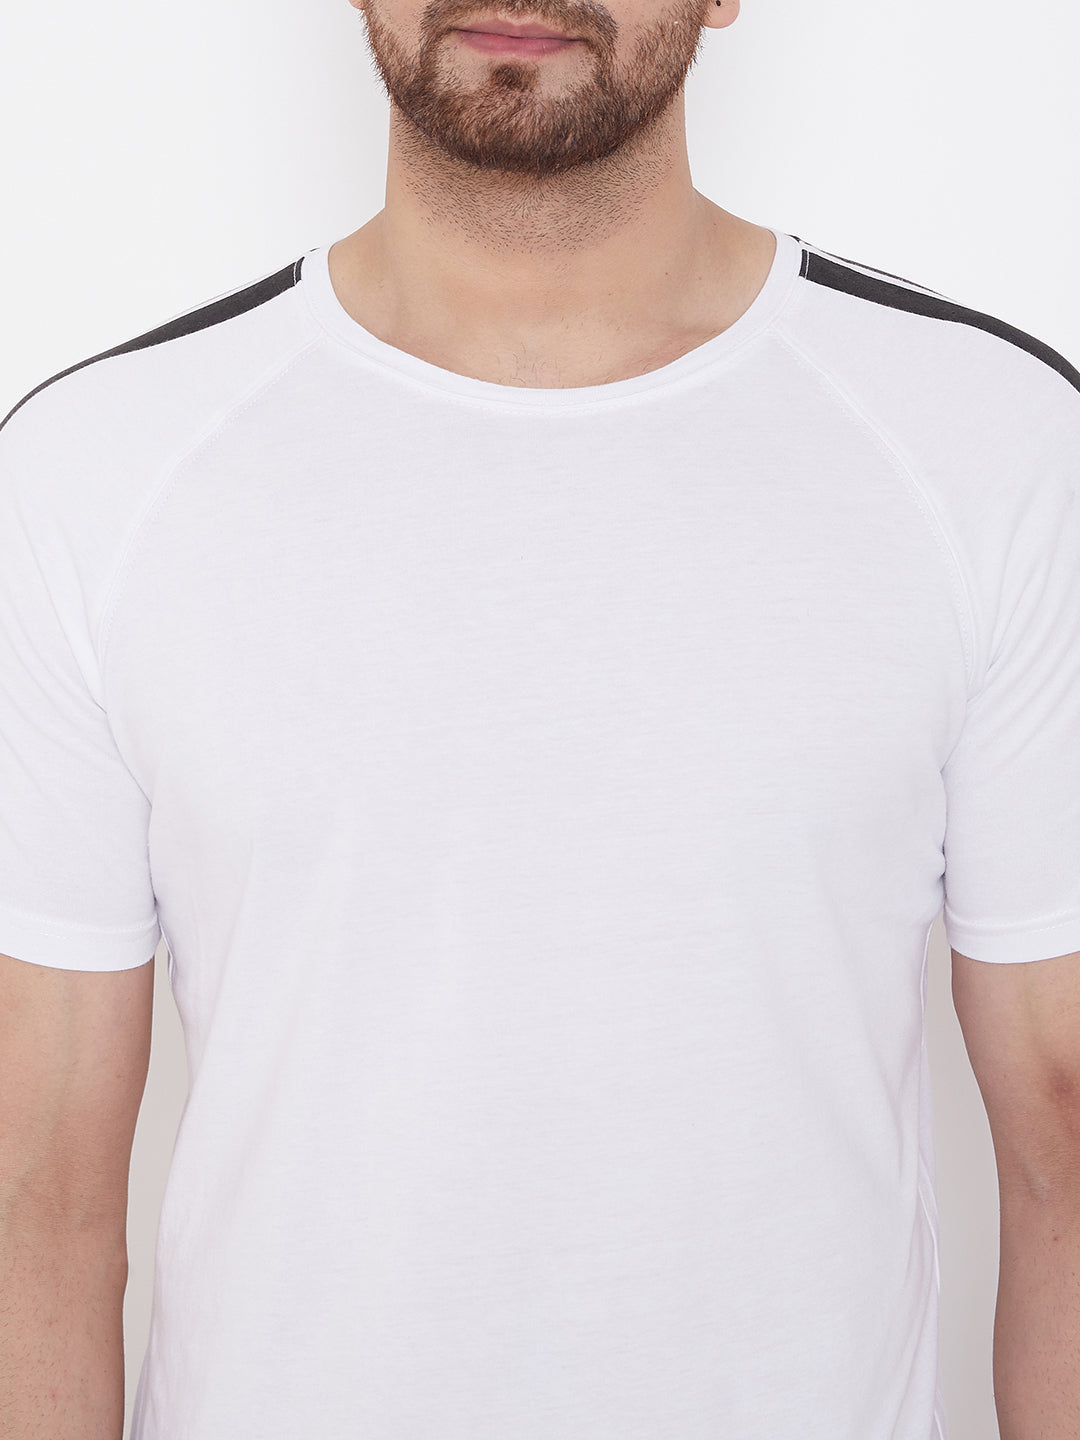 White Printed Men's Half Sleeves Round Neck T-Shirt